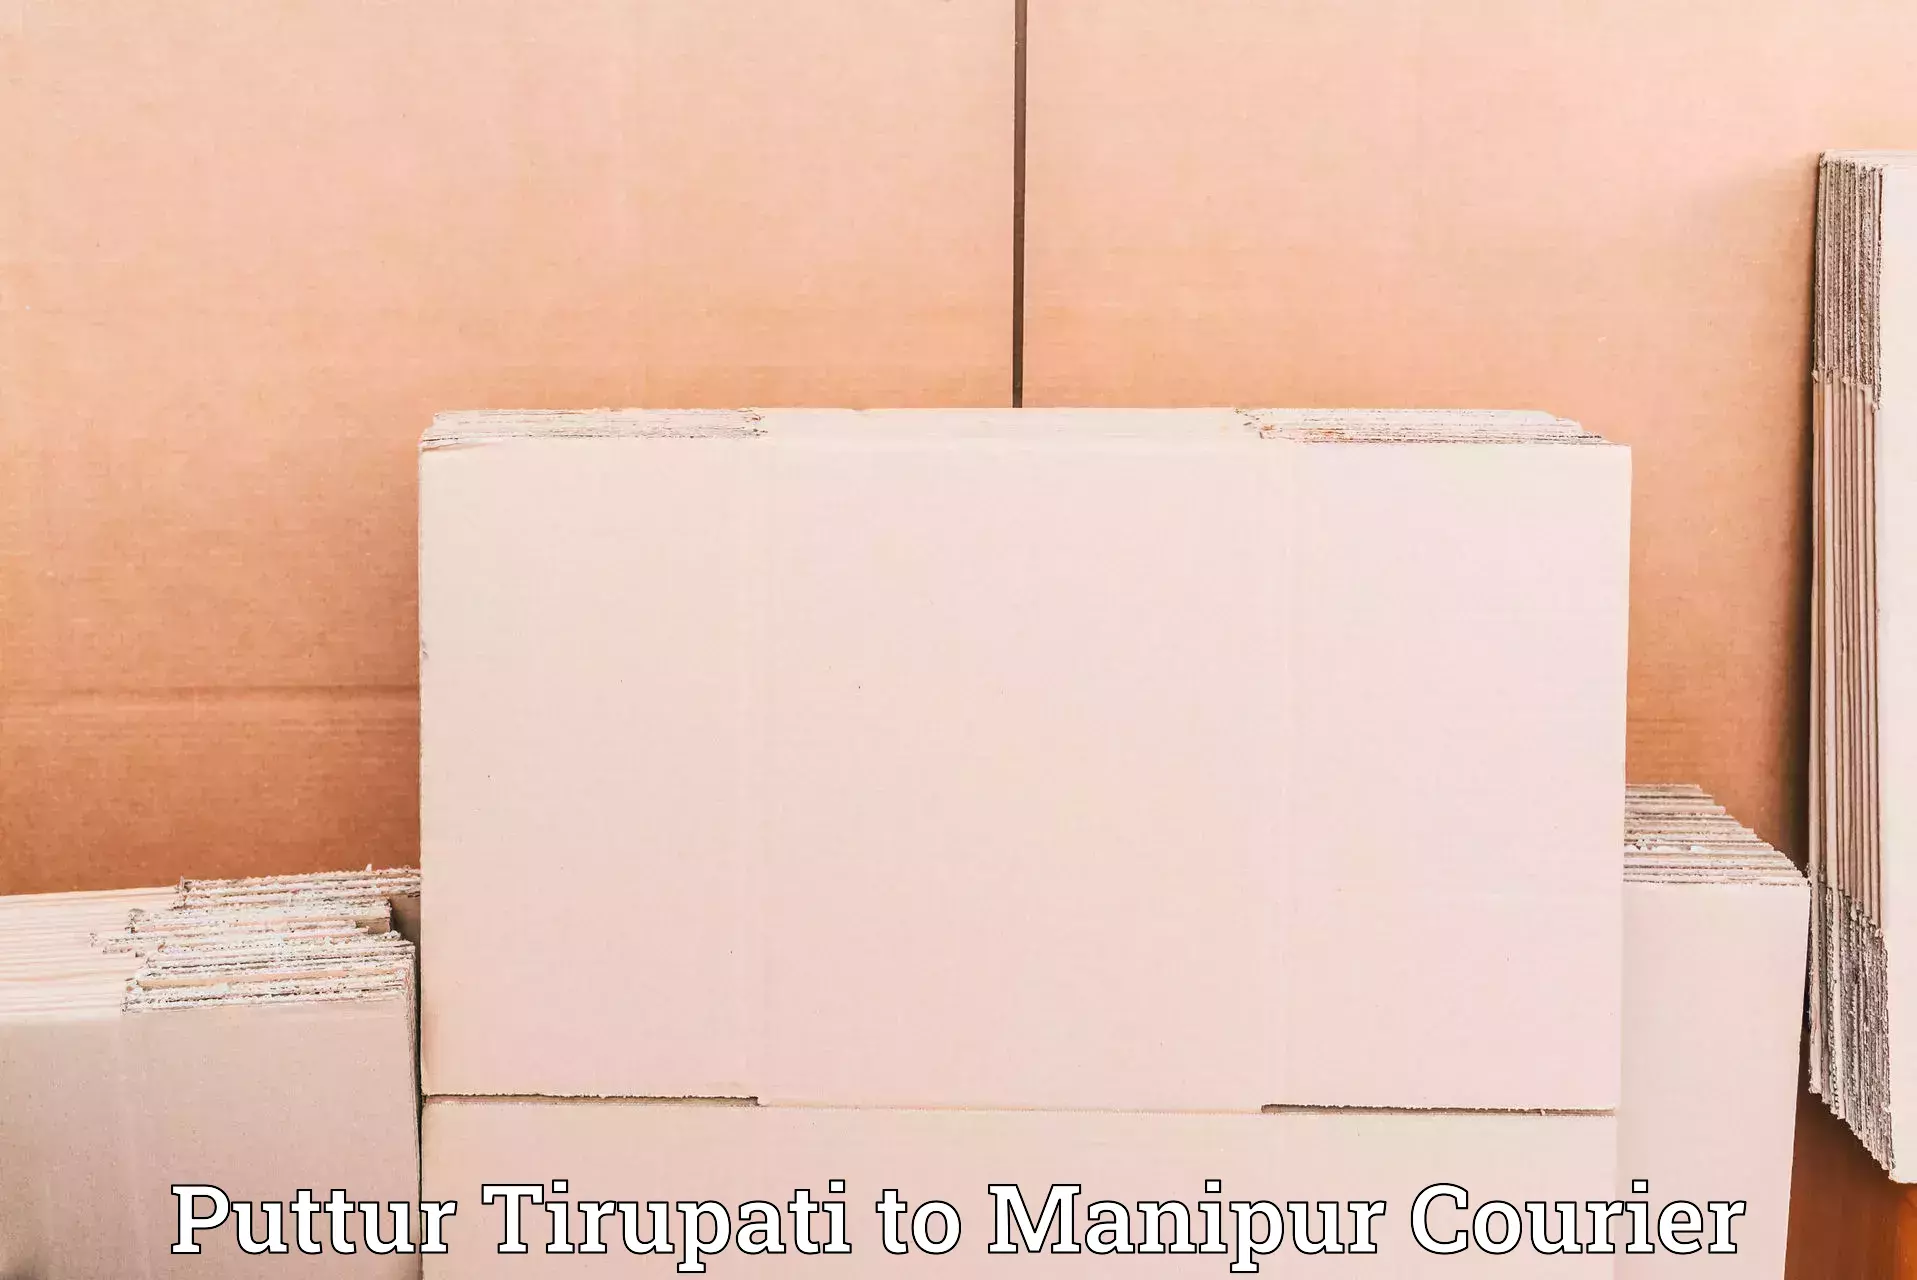 Customer-centric shipping Puttur Tirupati to Kanti